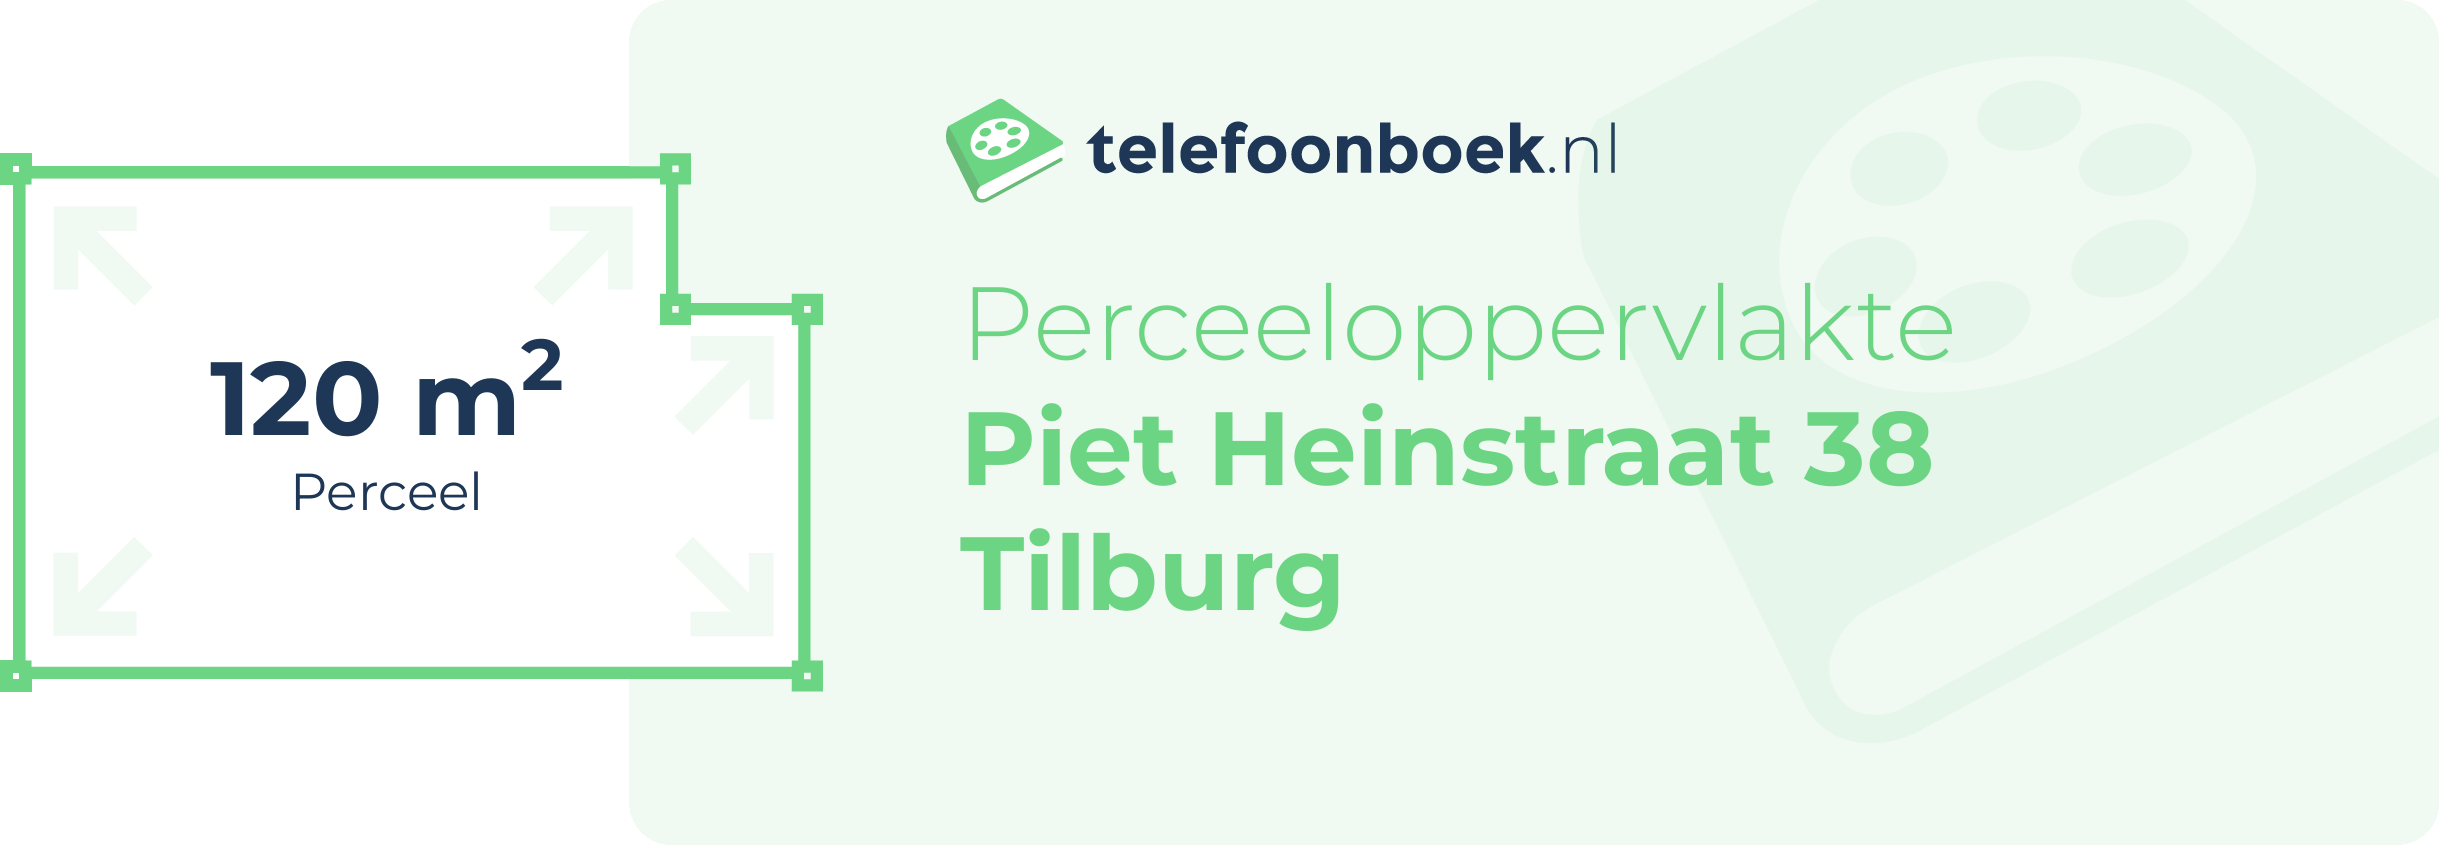 Perceeloppervlakte Piet Heinstraat 38 Tilburg